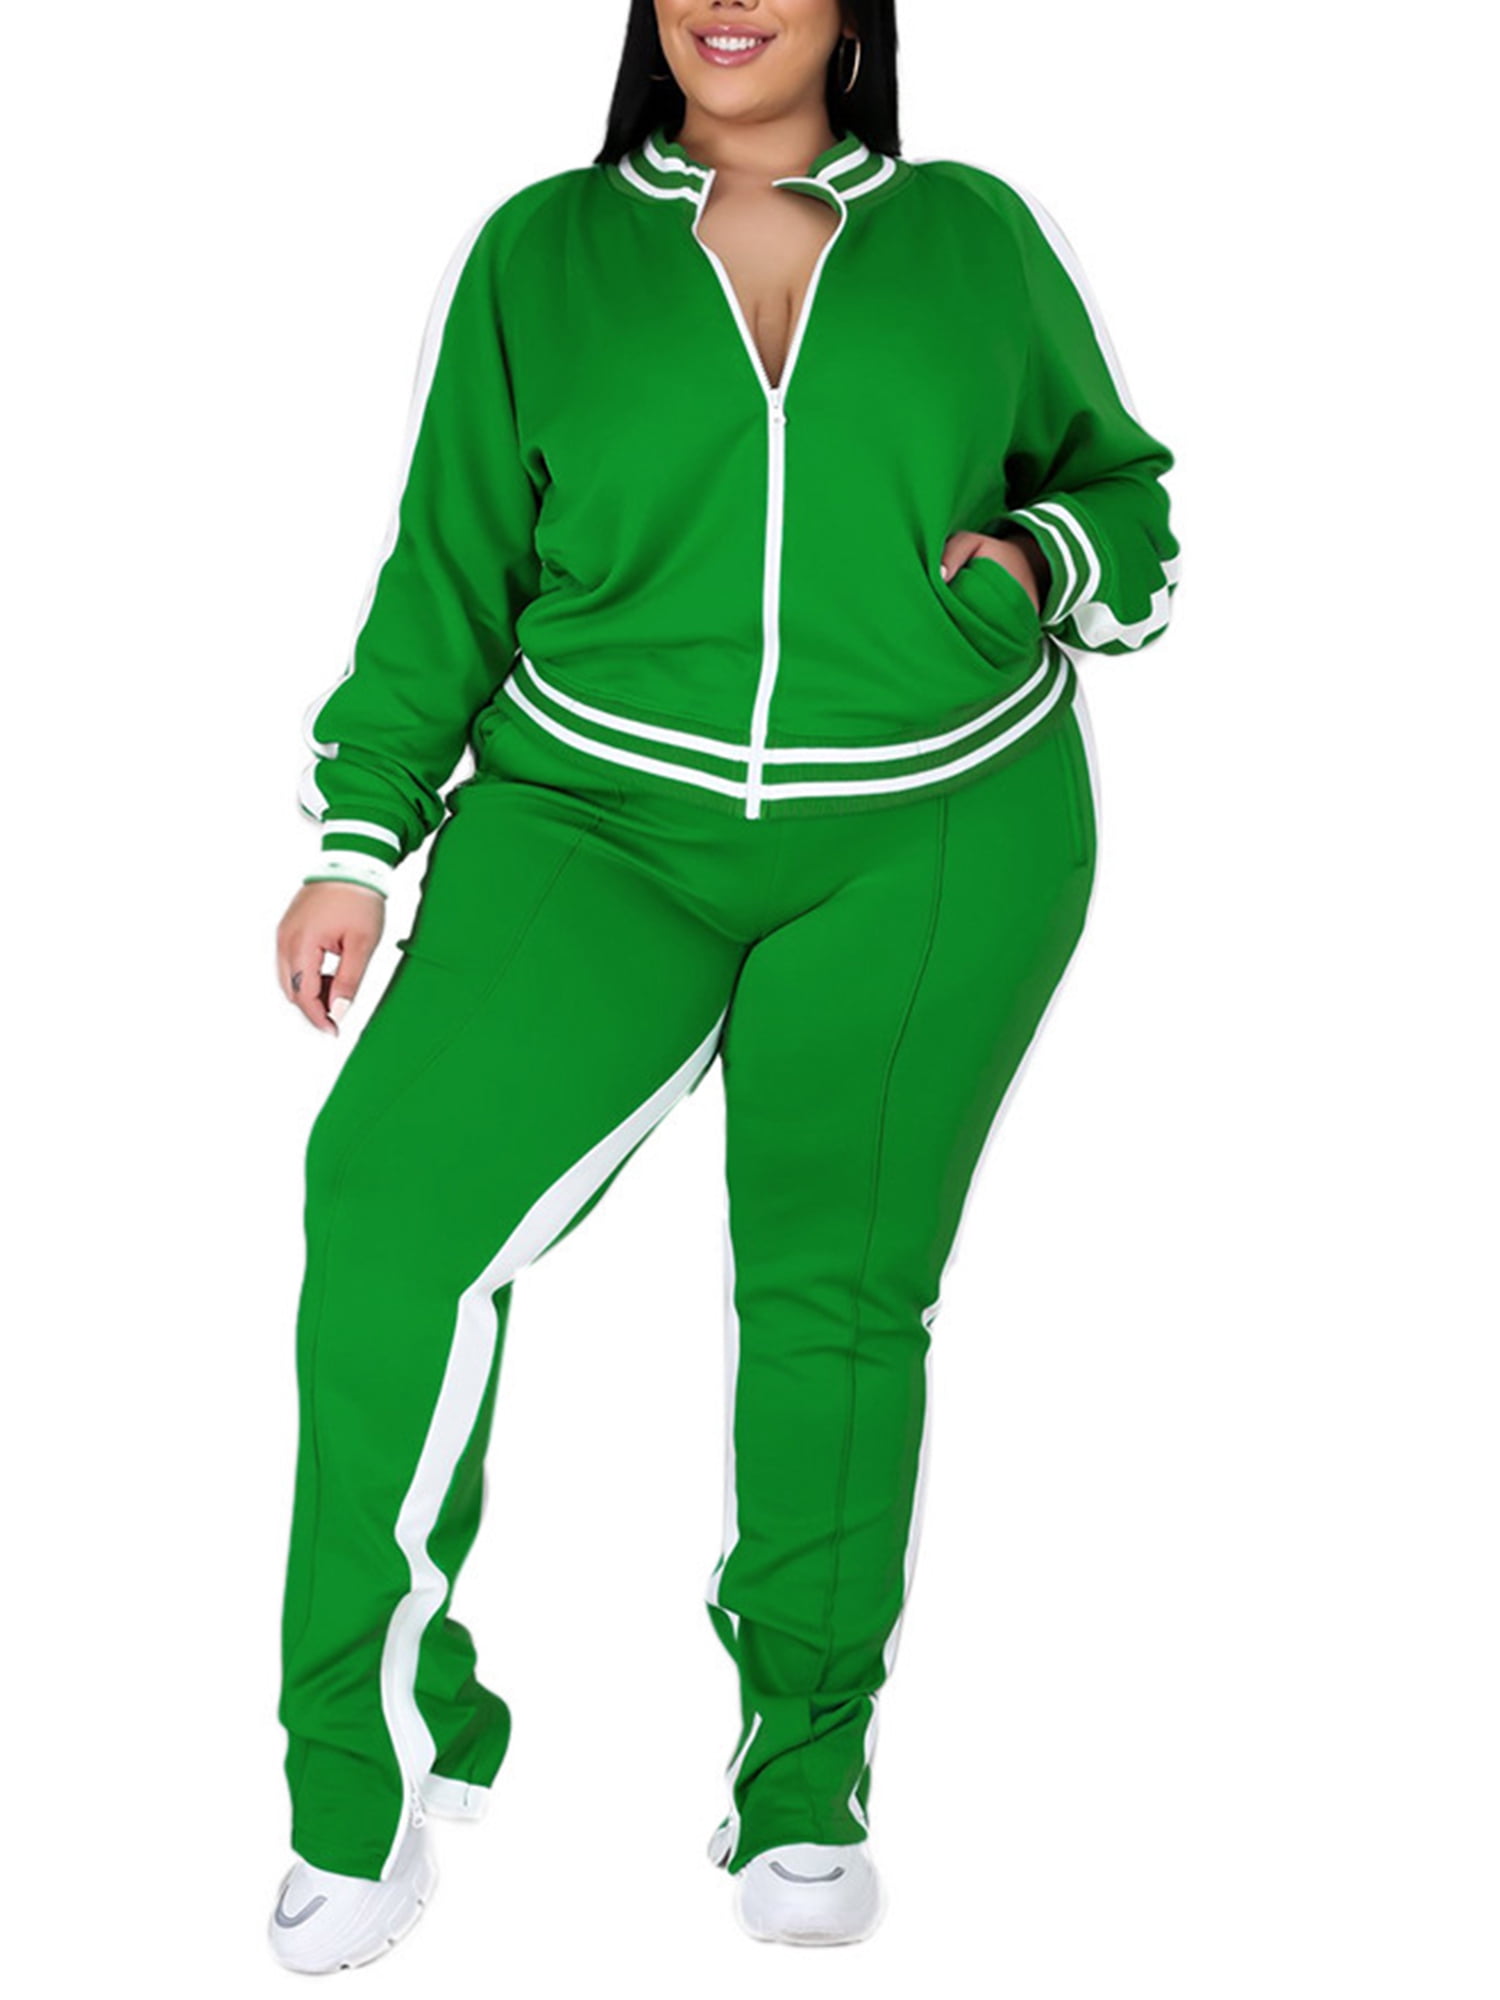 Capreze Plus Size Two Piece Outfits for Women Oversized Casual Track Suits  for Ladies Jogging Set Zipper Sweatshirt with Pockets Light Green XXXXXL 